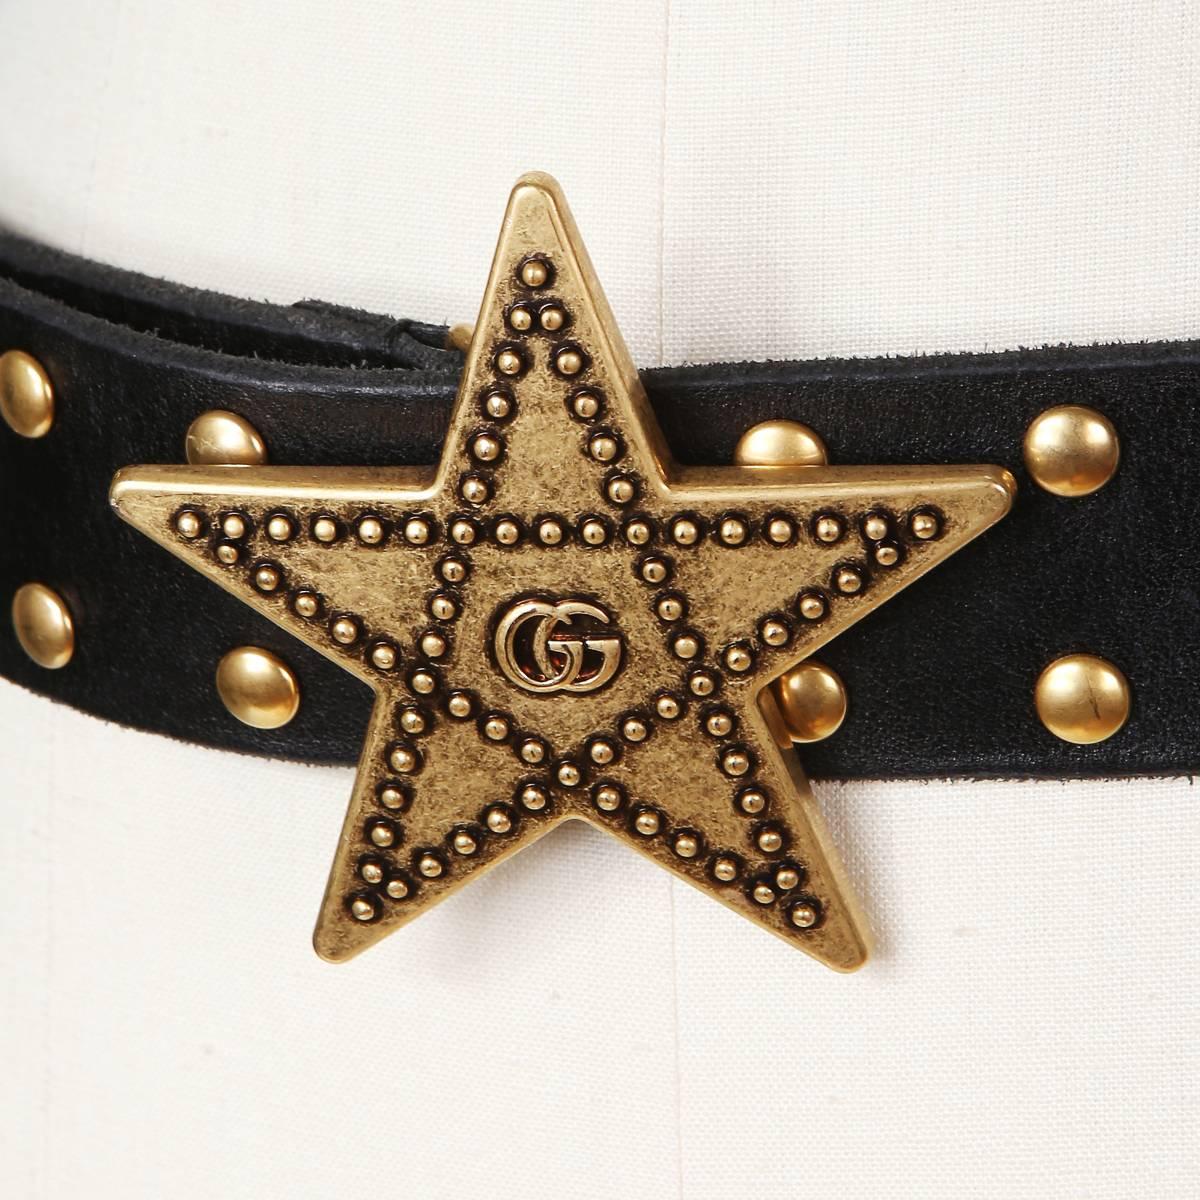 Gucci black leather belt.  Antique gold dome studs and star shaped belt buckle with GG logo.  

Belt size 80
Adjustable 30-32